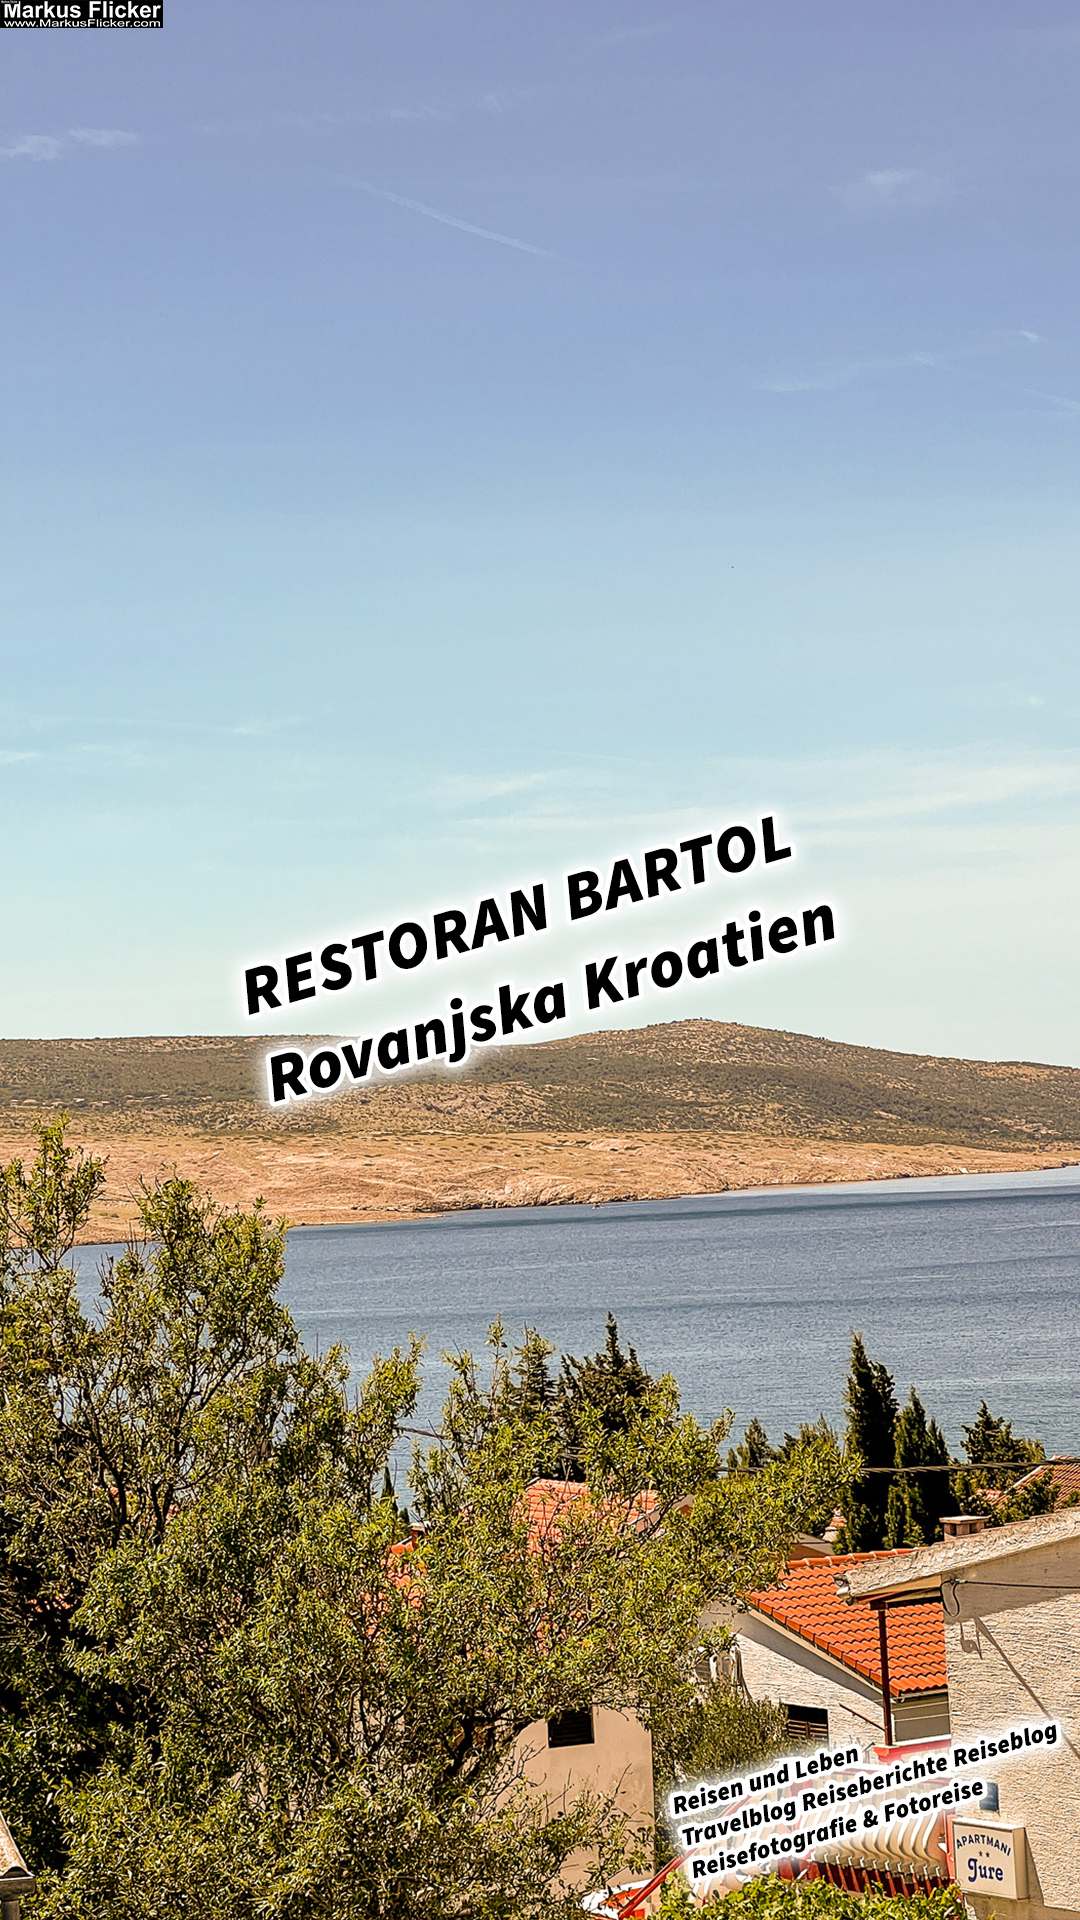 RESTORAN BARTOL Rovanjska Kroatien #visitcroatia